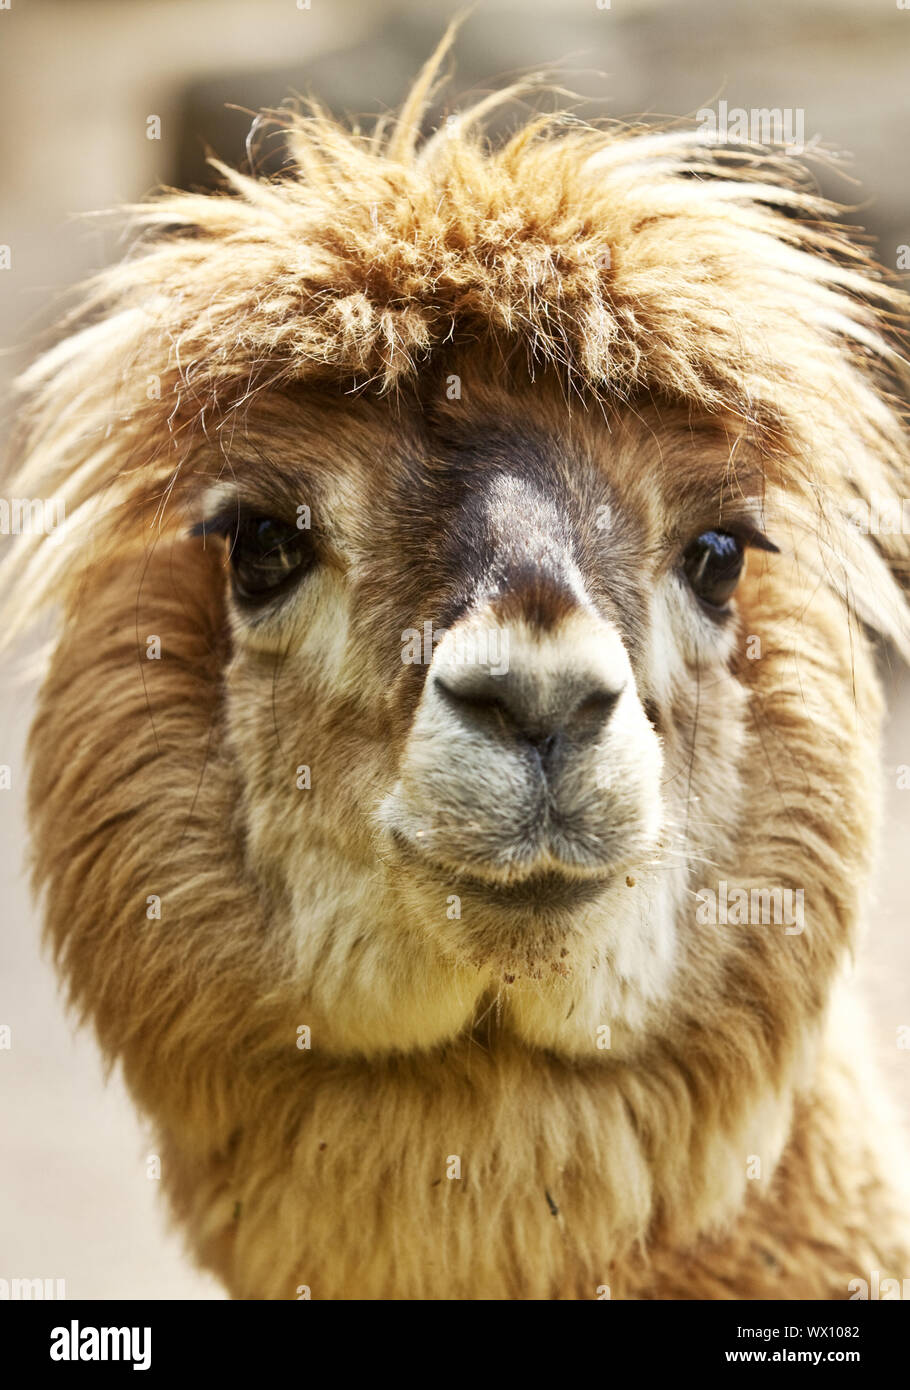 alpaca (Lama guanacoef. paco, Lama pacos, Vicugna pacos), portrait, Dortmund, Germany, Europe Stock Photo